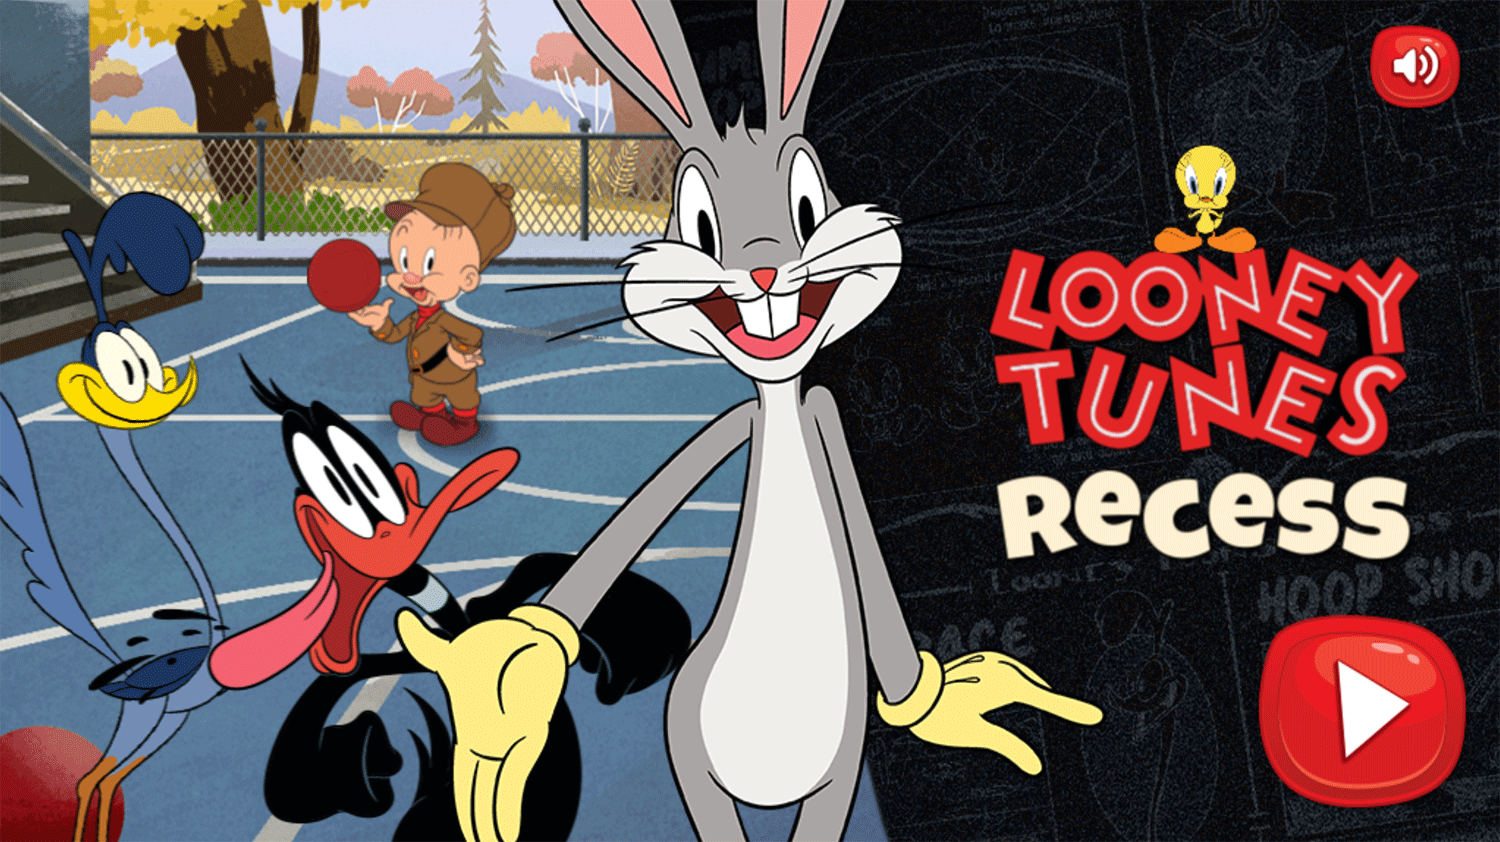 Looney Tunes Recess Game Welcome Screen Screenshot.